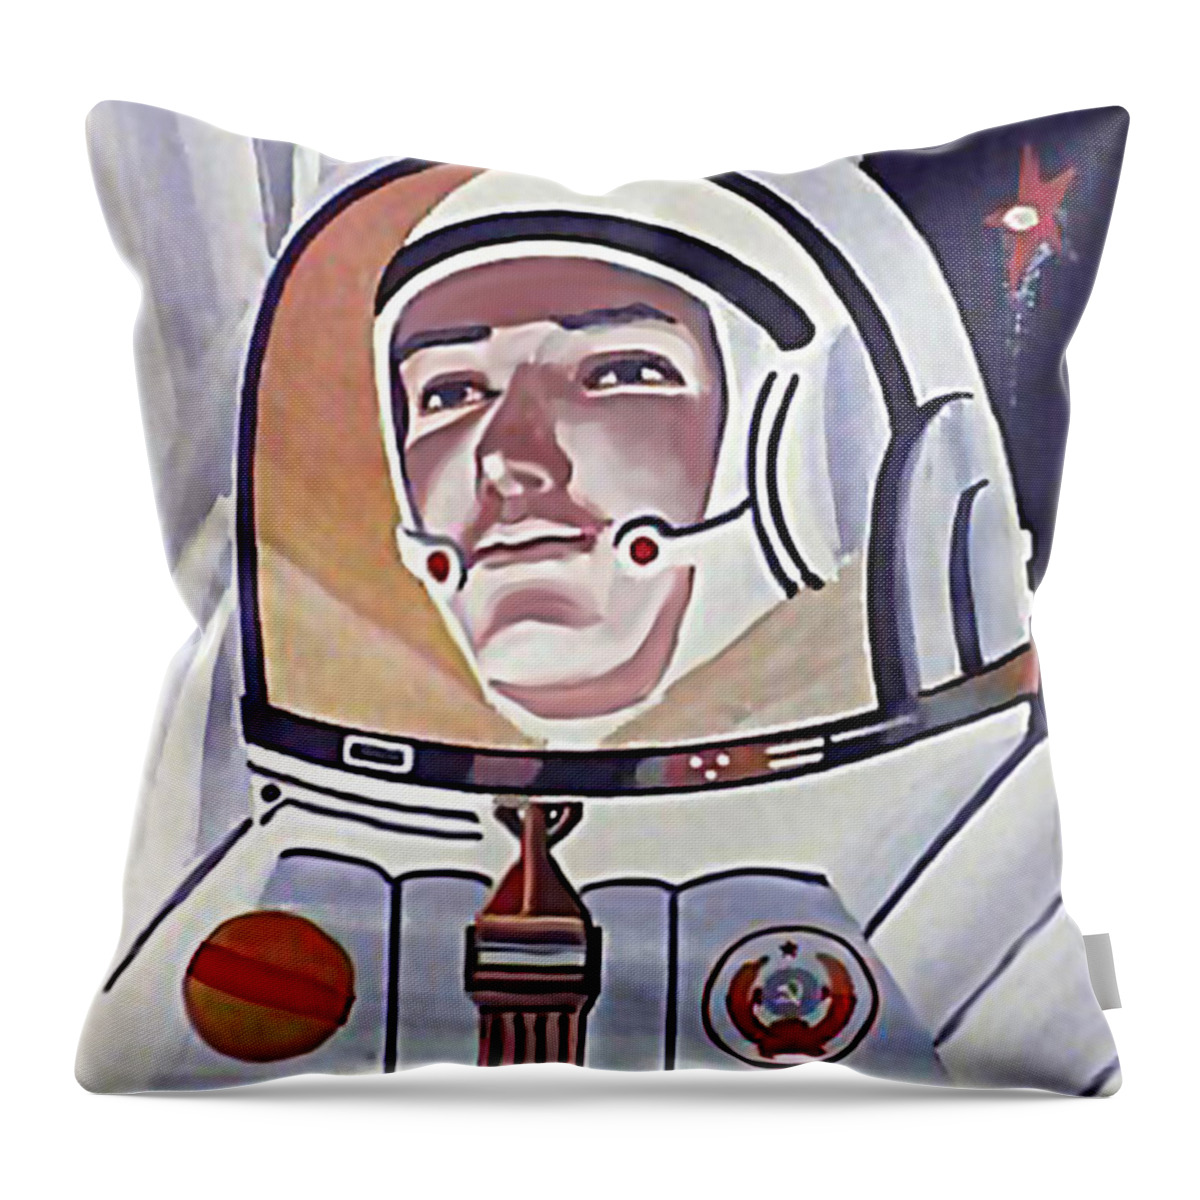 Cosmonaut Throw Pillow featuring the digital art Cosmonaut Inside Rocket by Long Shot